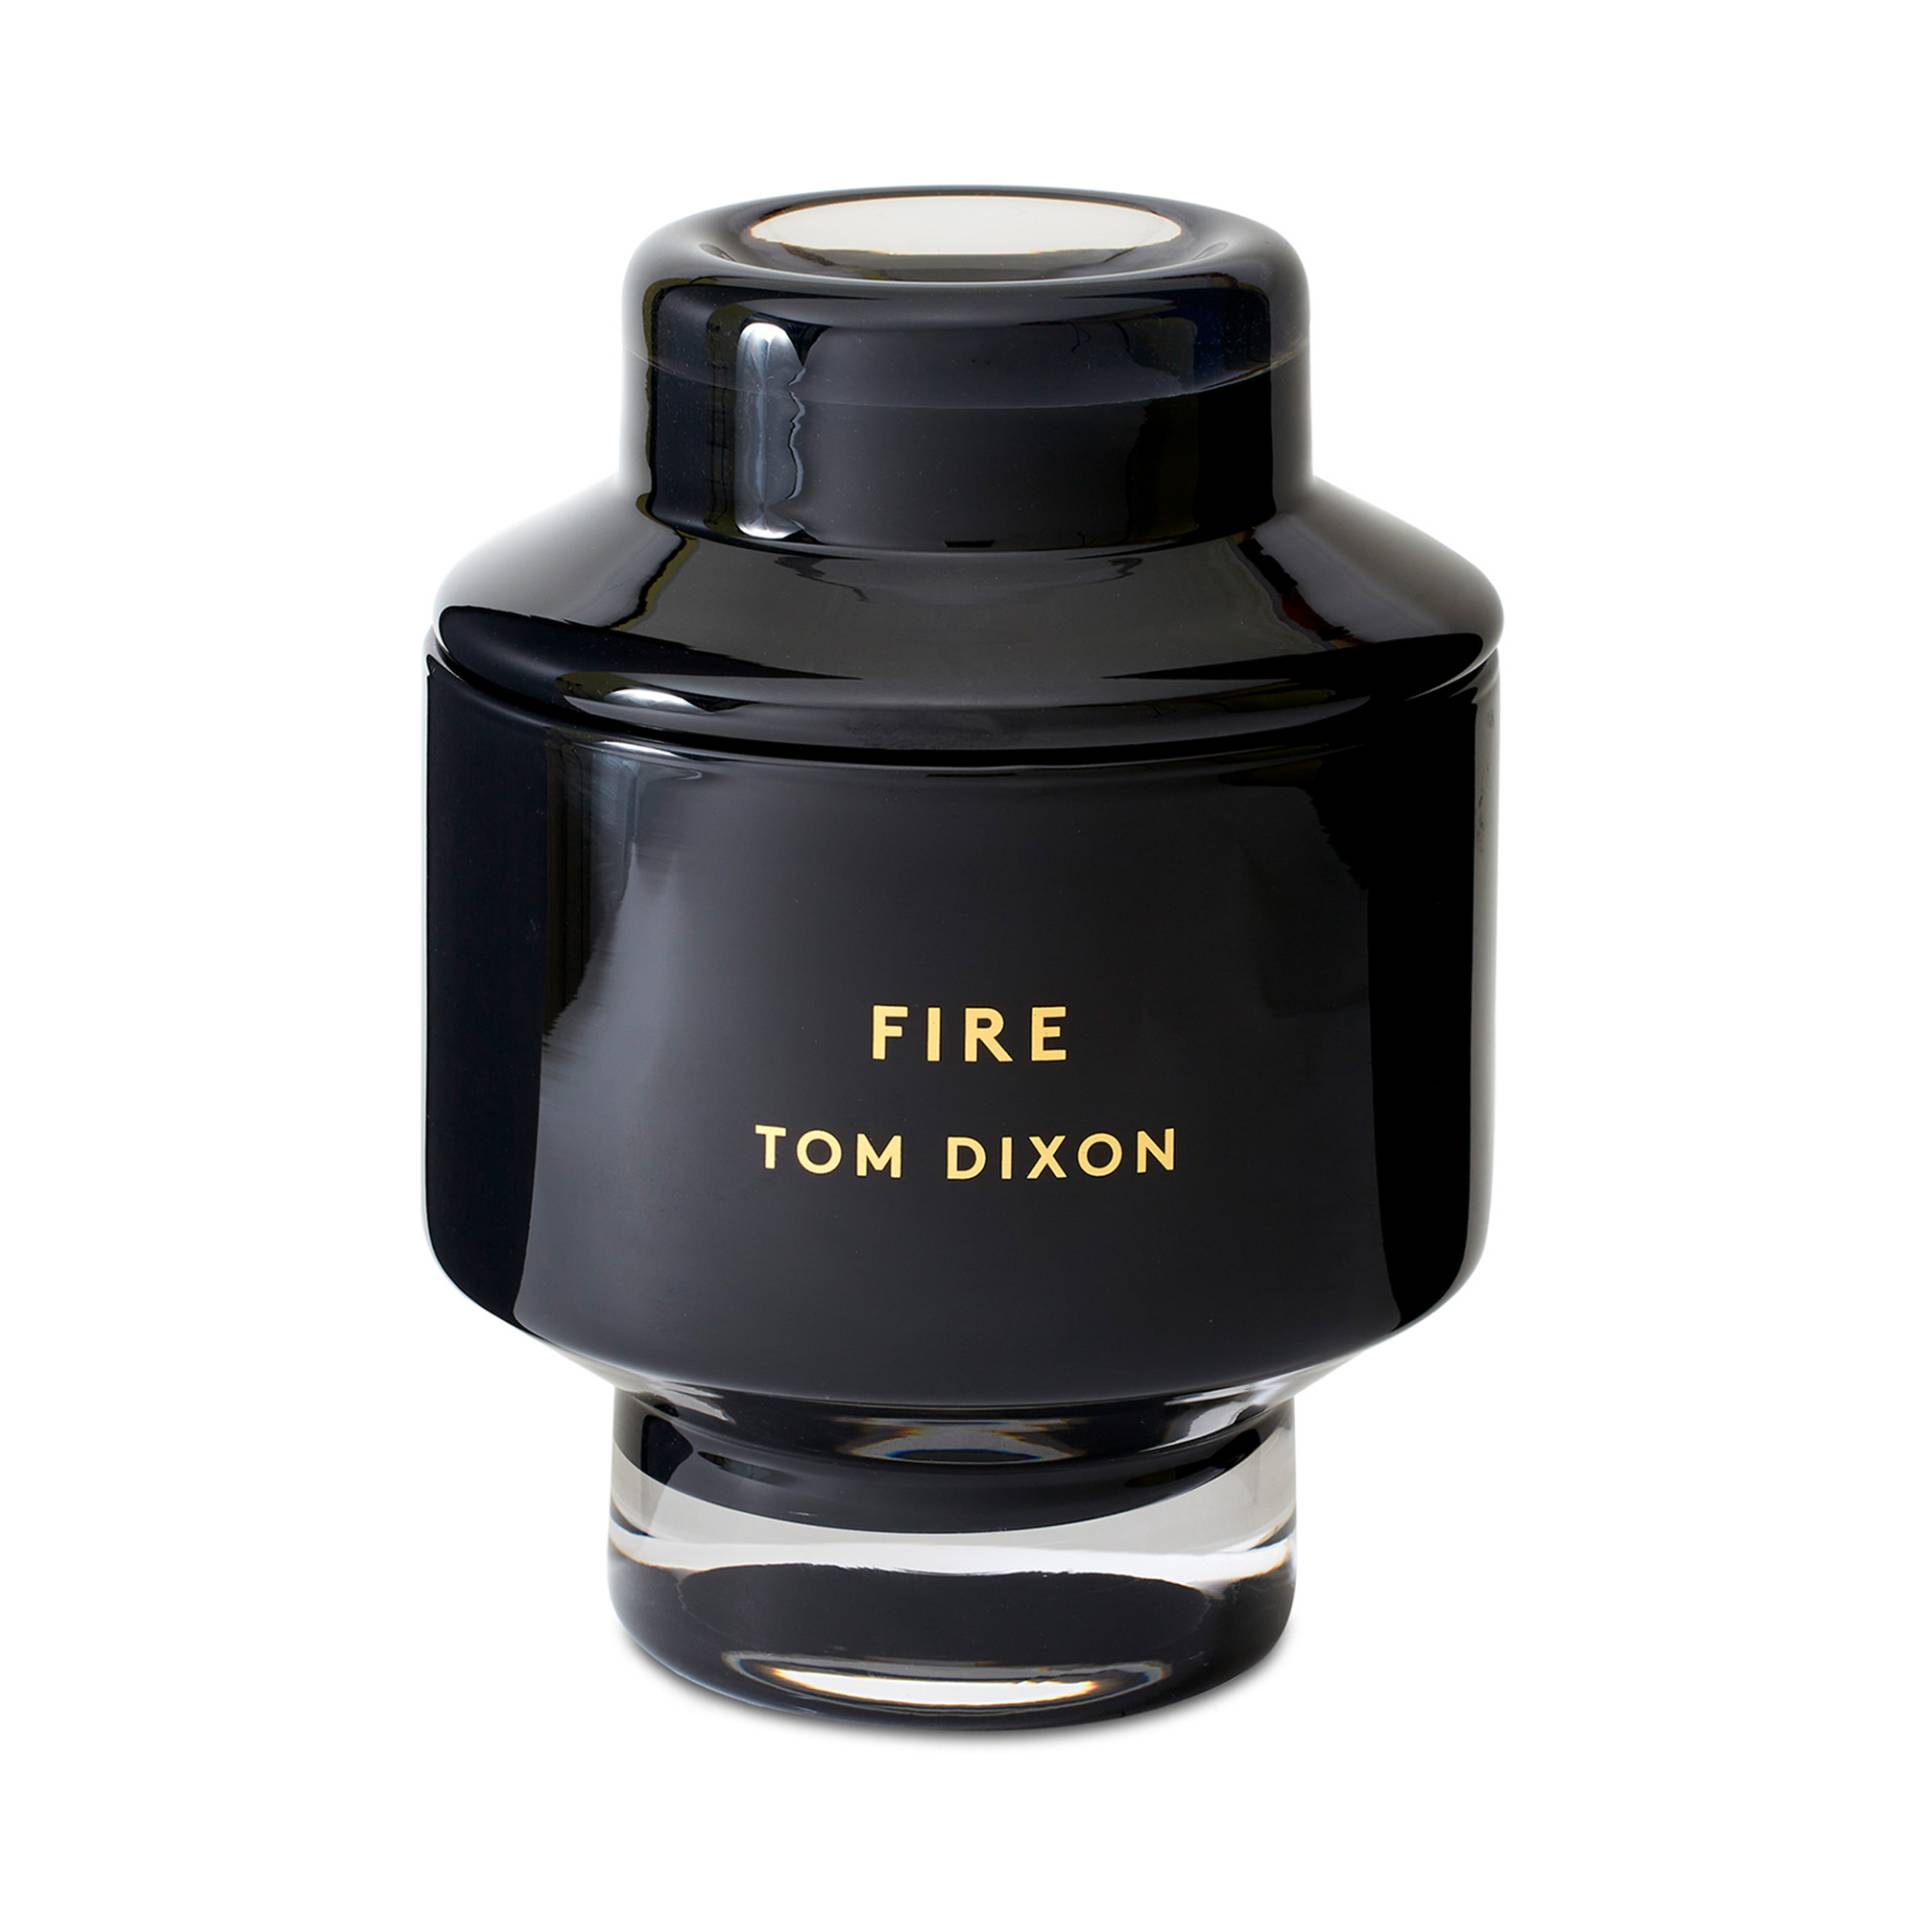 Tom Dixon - Scent Elements Fire Duftkerze M - schwarz/H x Ø 14,7x10,2cm/Cypriol Öl, Guajak, Amber, Moschus von Tom Dixon